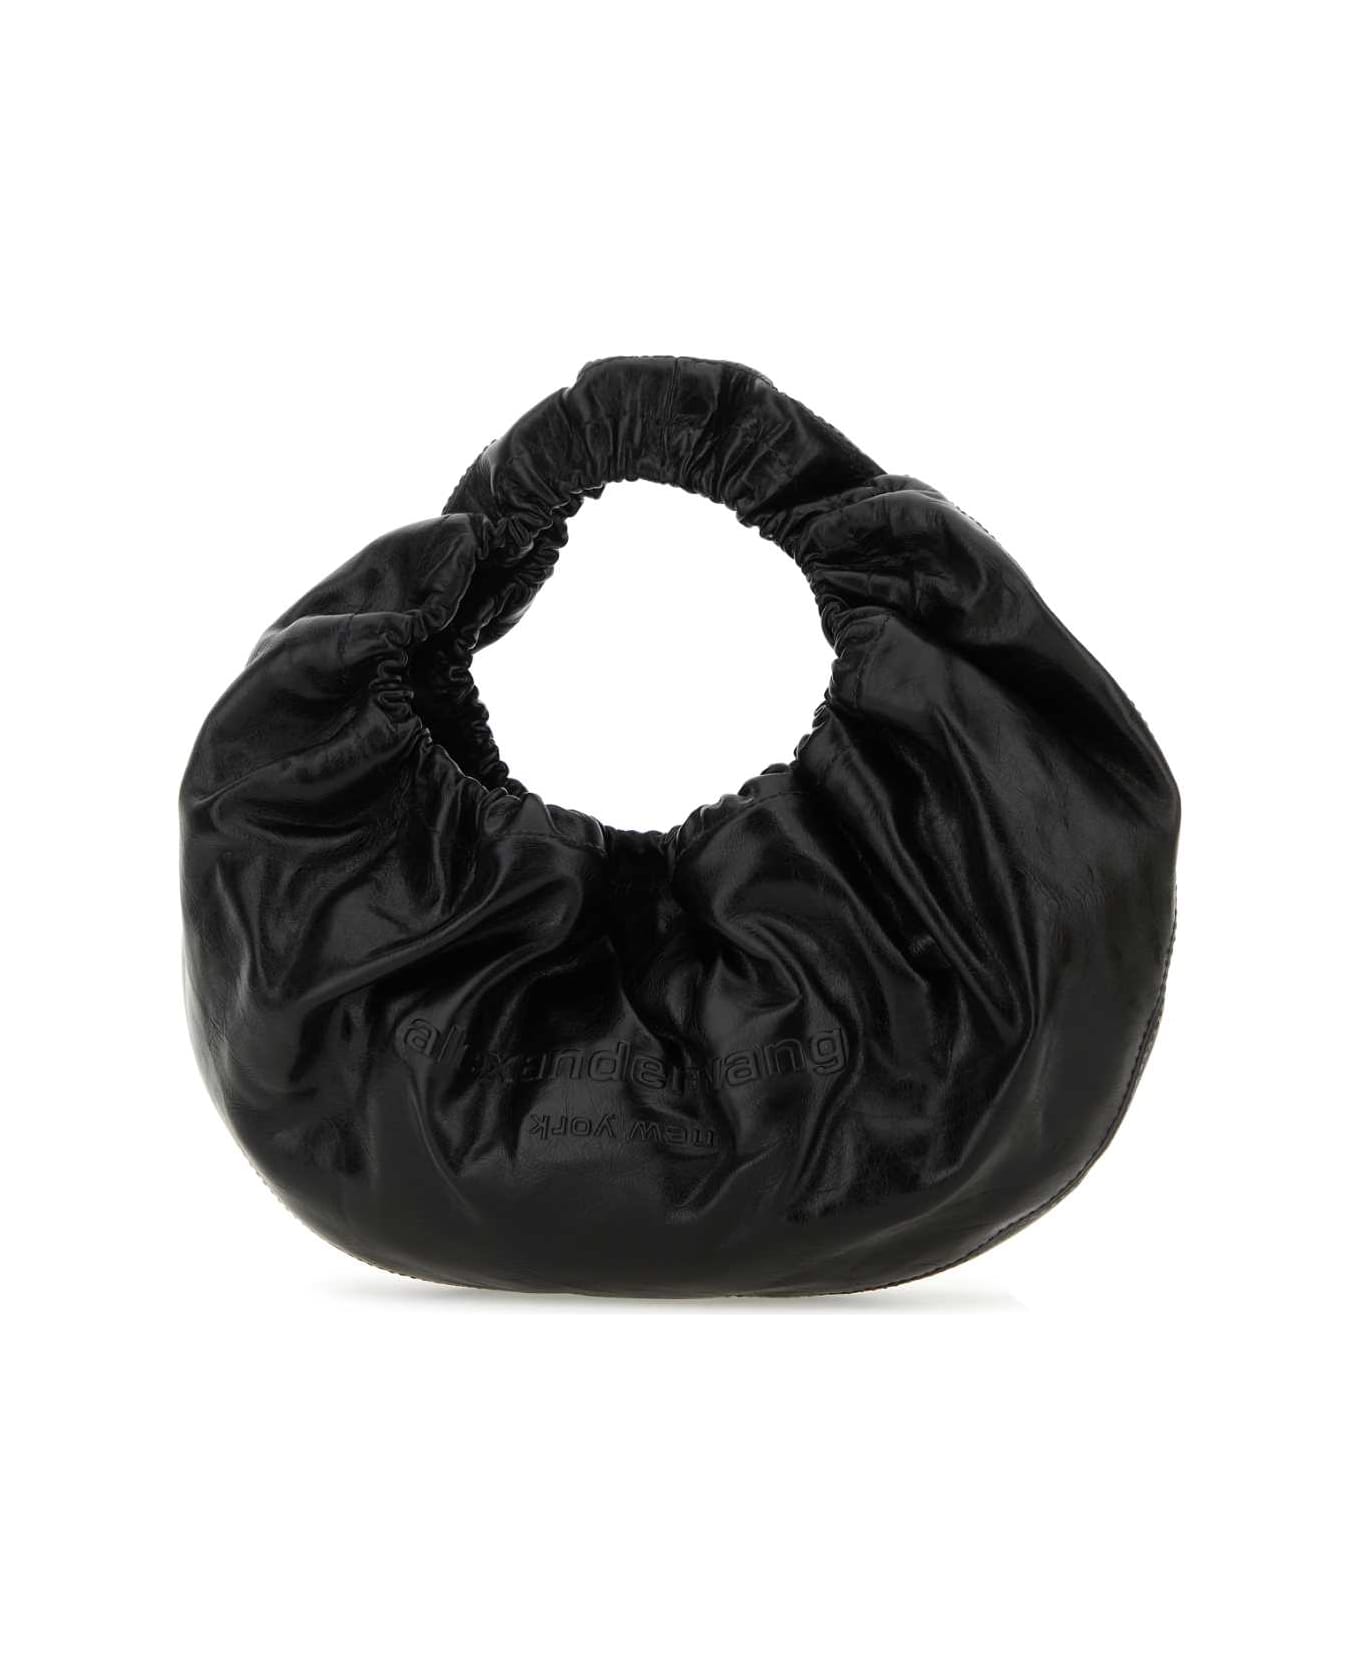 Alexander Wang Black Leather Small Crescent Handbag - BLACK